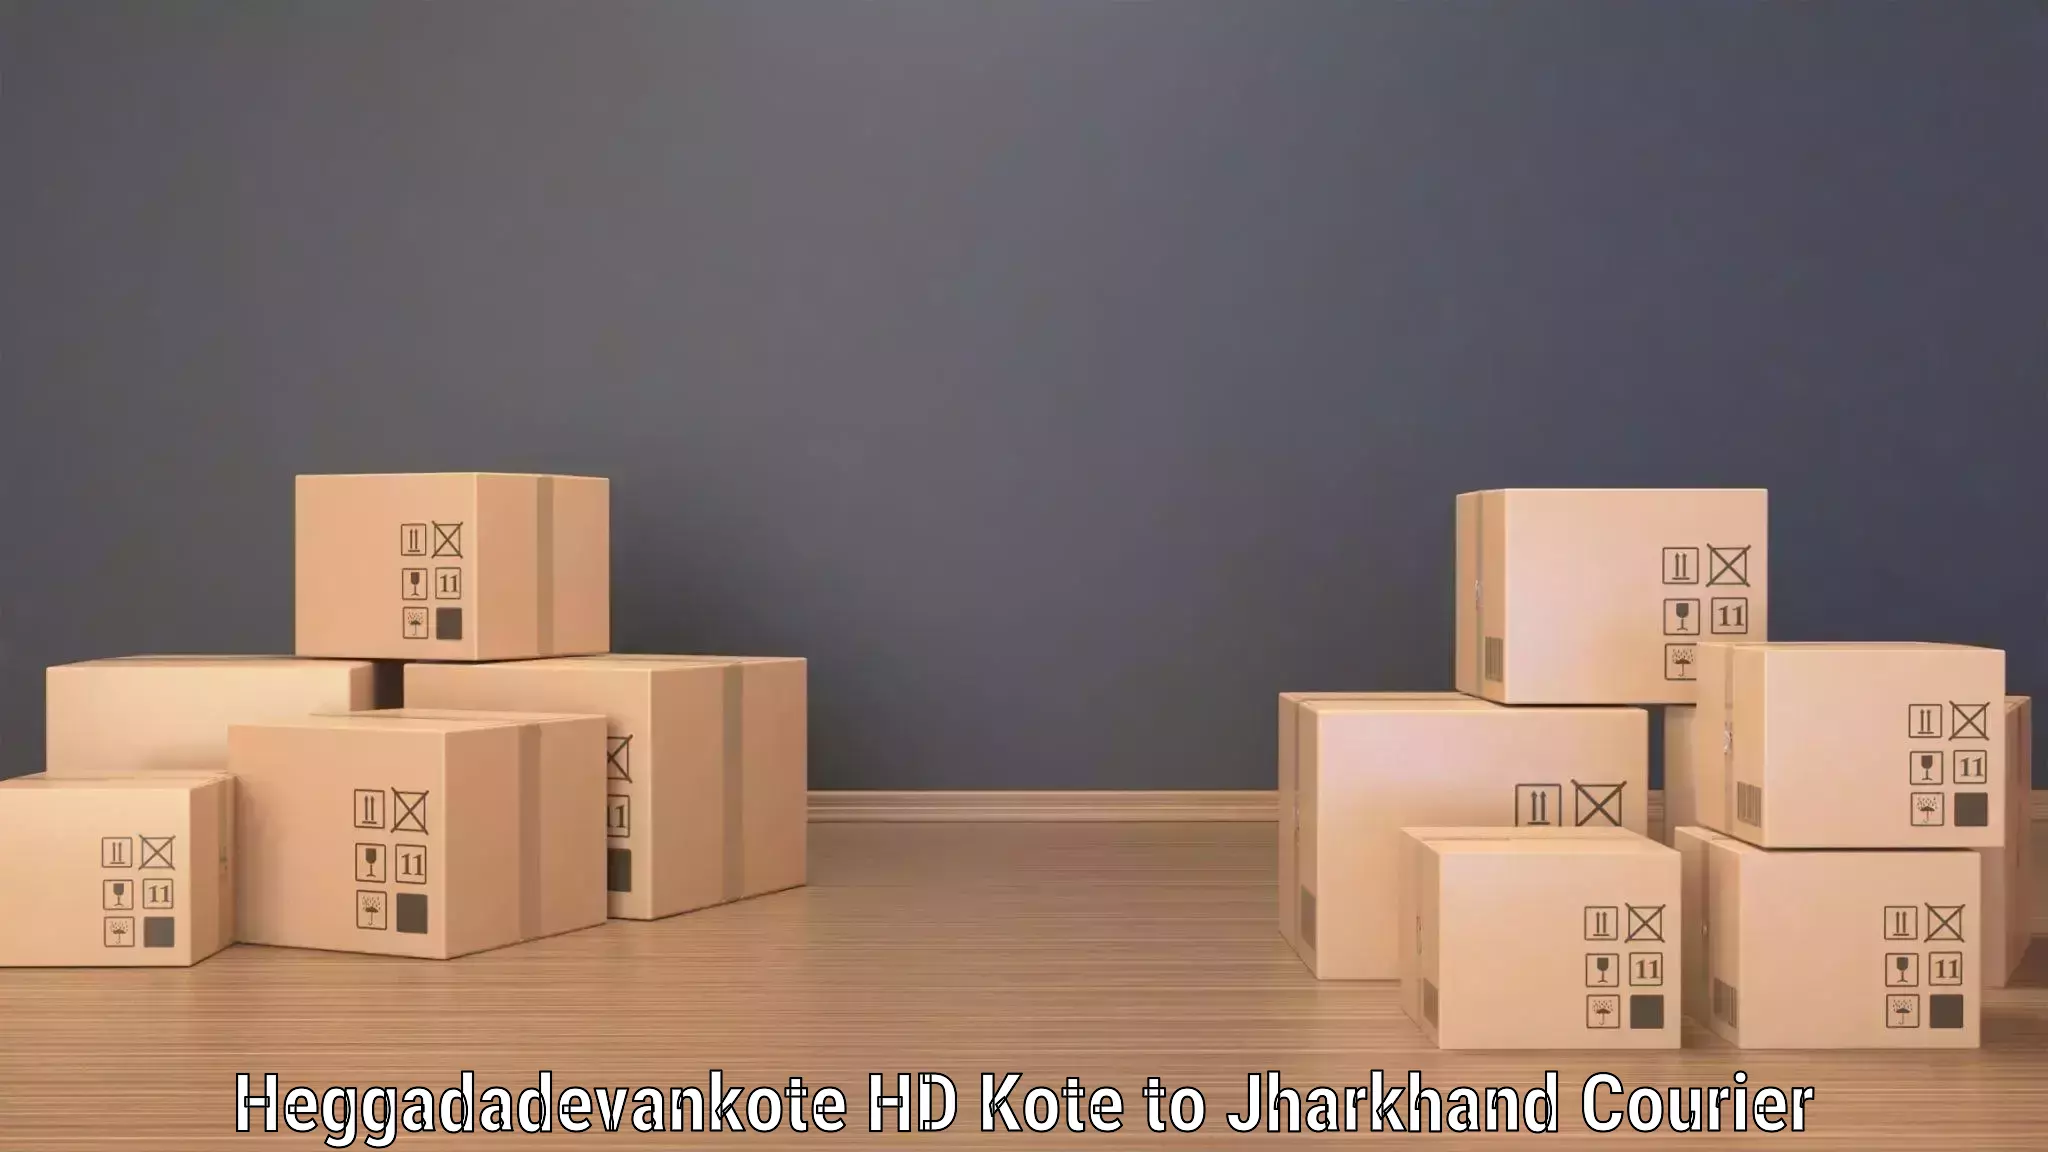 Efficient parcel service Heggadadevankote HD Kote to Chaibasa